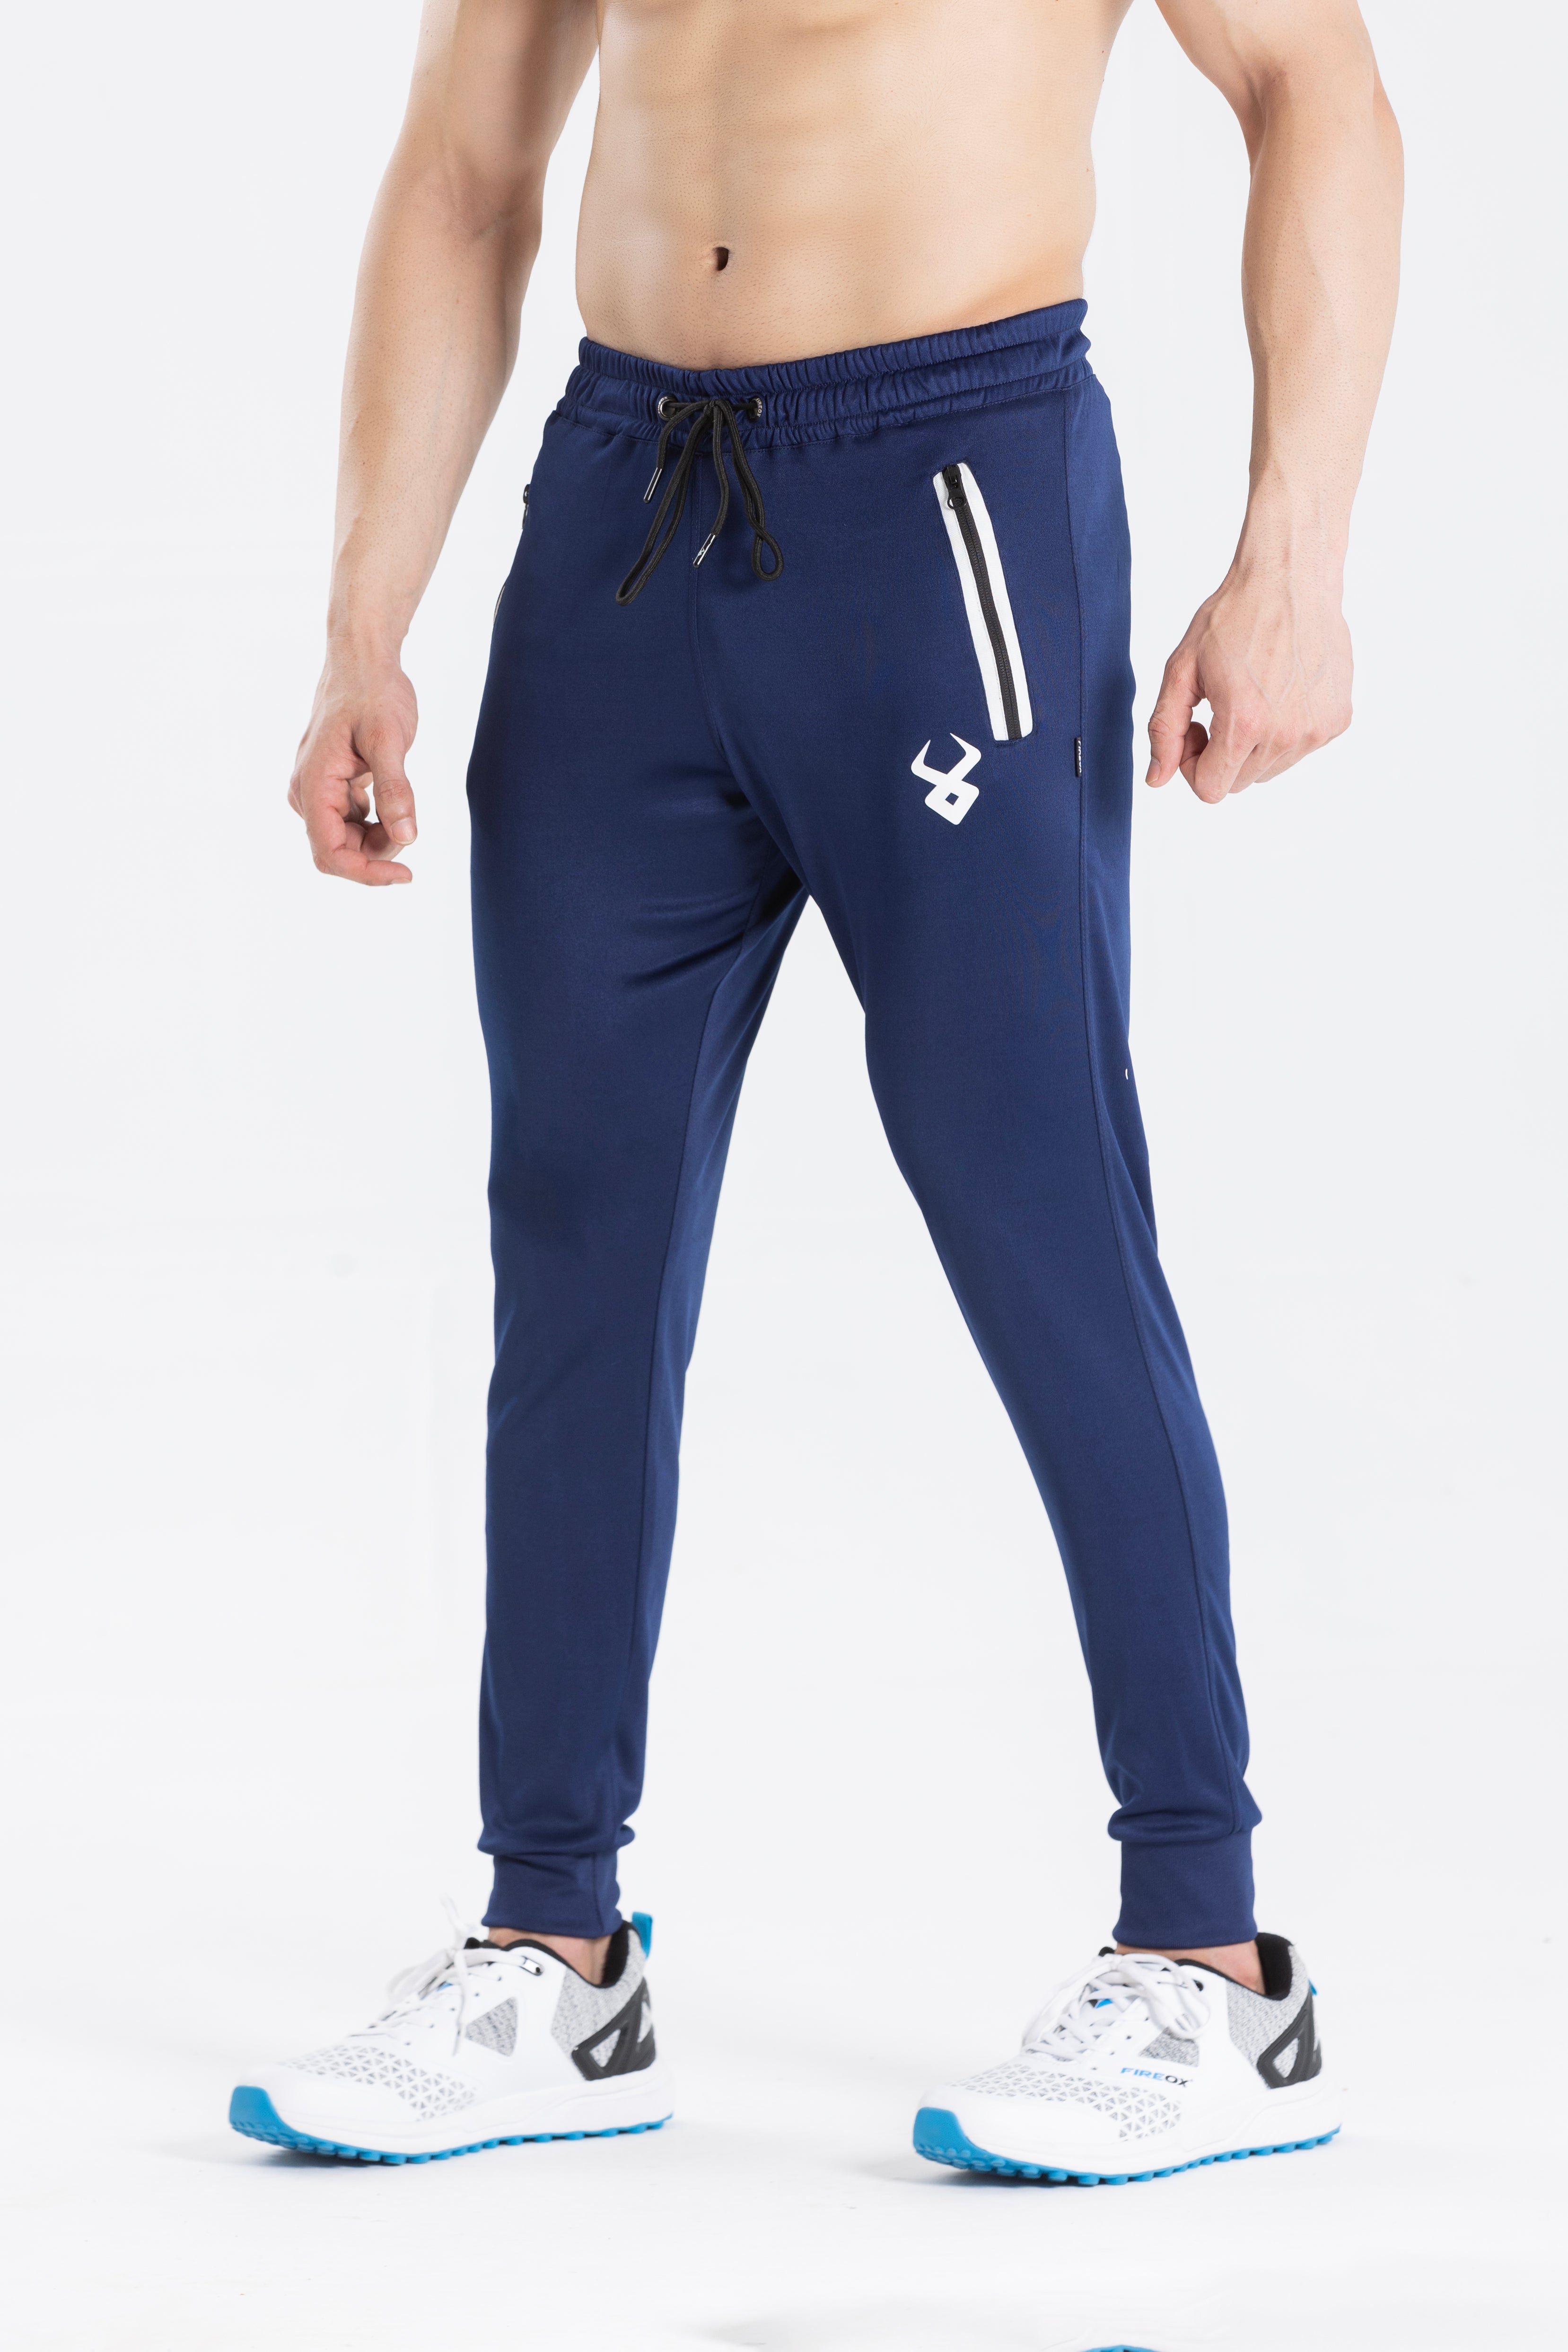 FIREOX Activewear Trouser Navy Blue, 2023